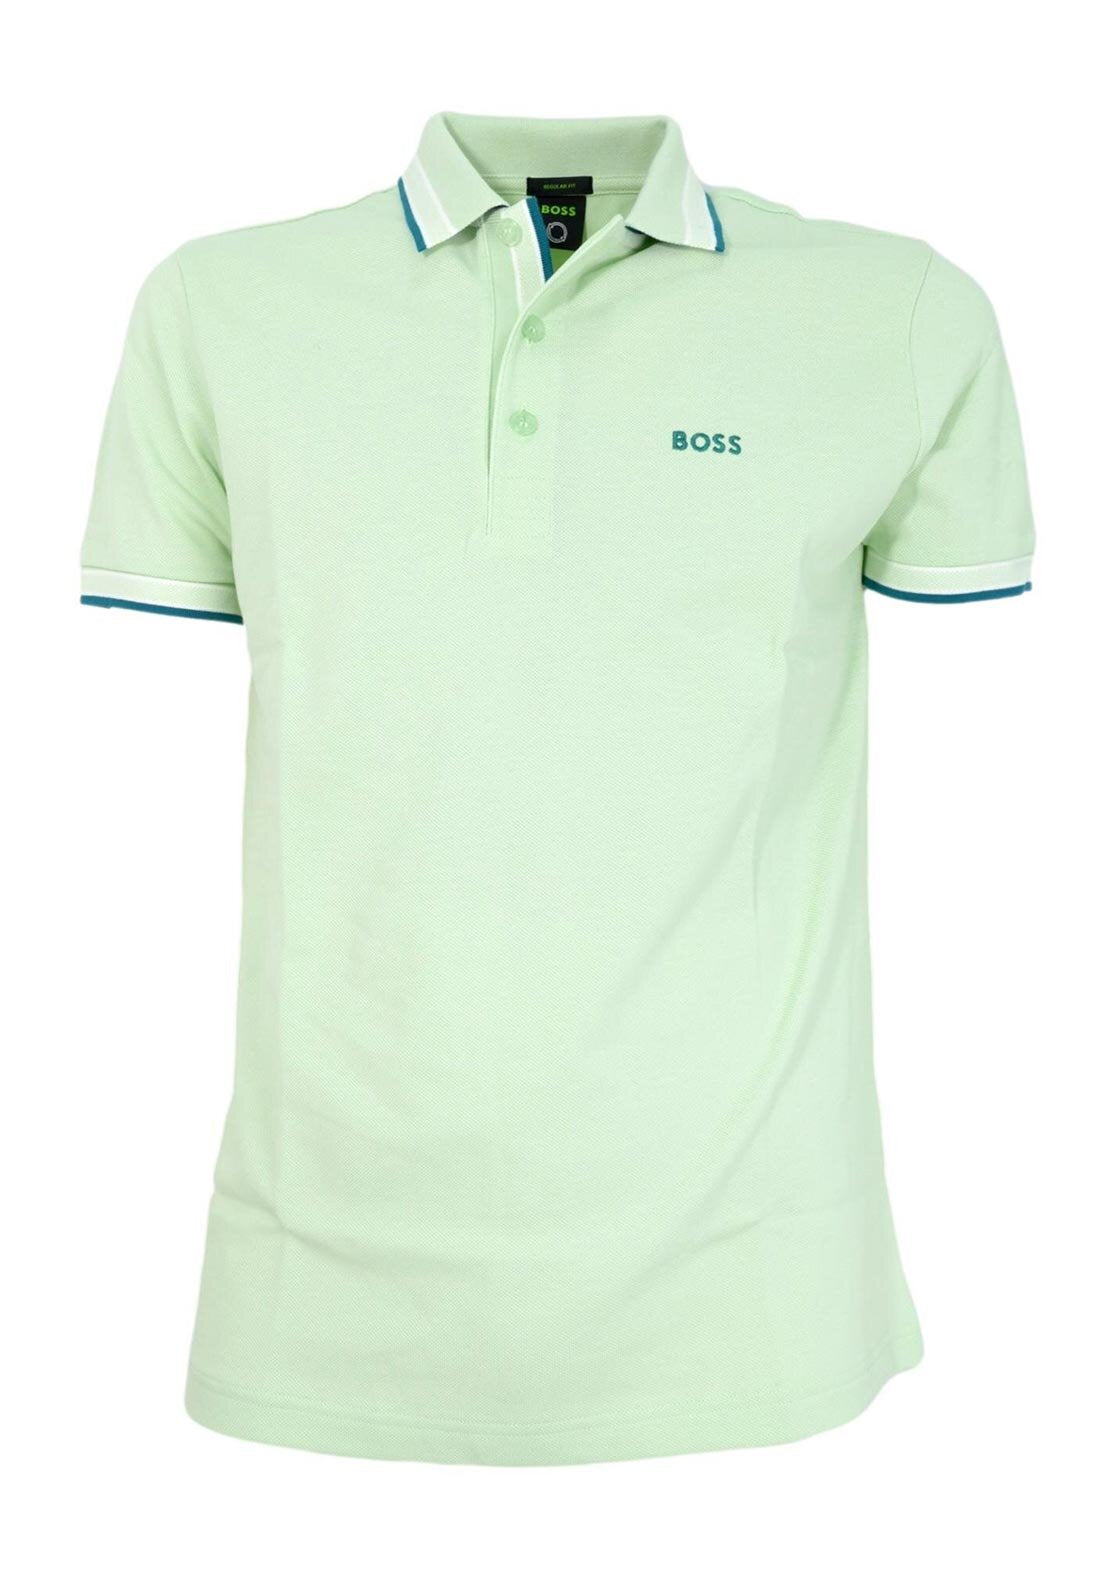 Hugo Boss Paddy Polo Shirt, Mint Green - McElhinneys